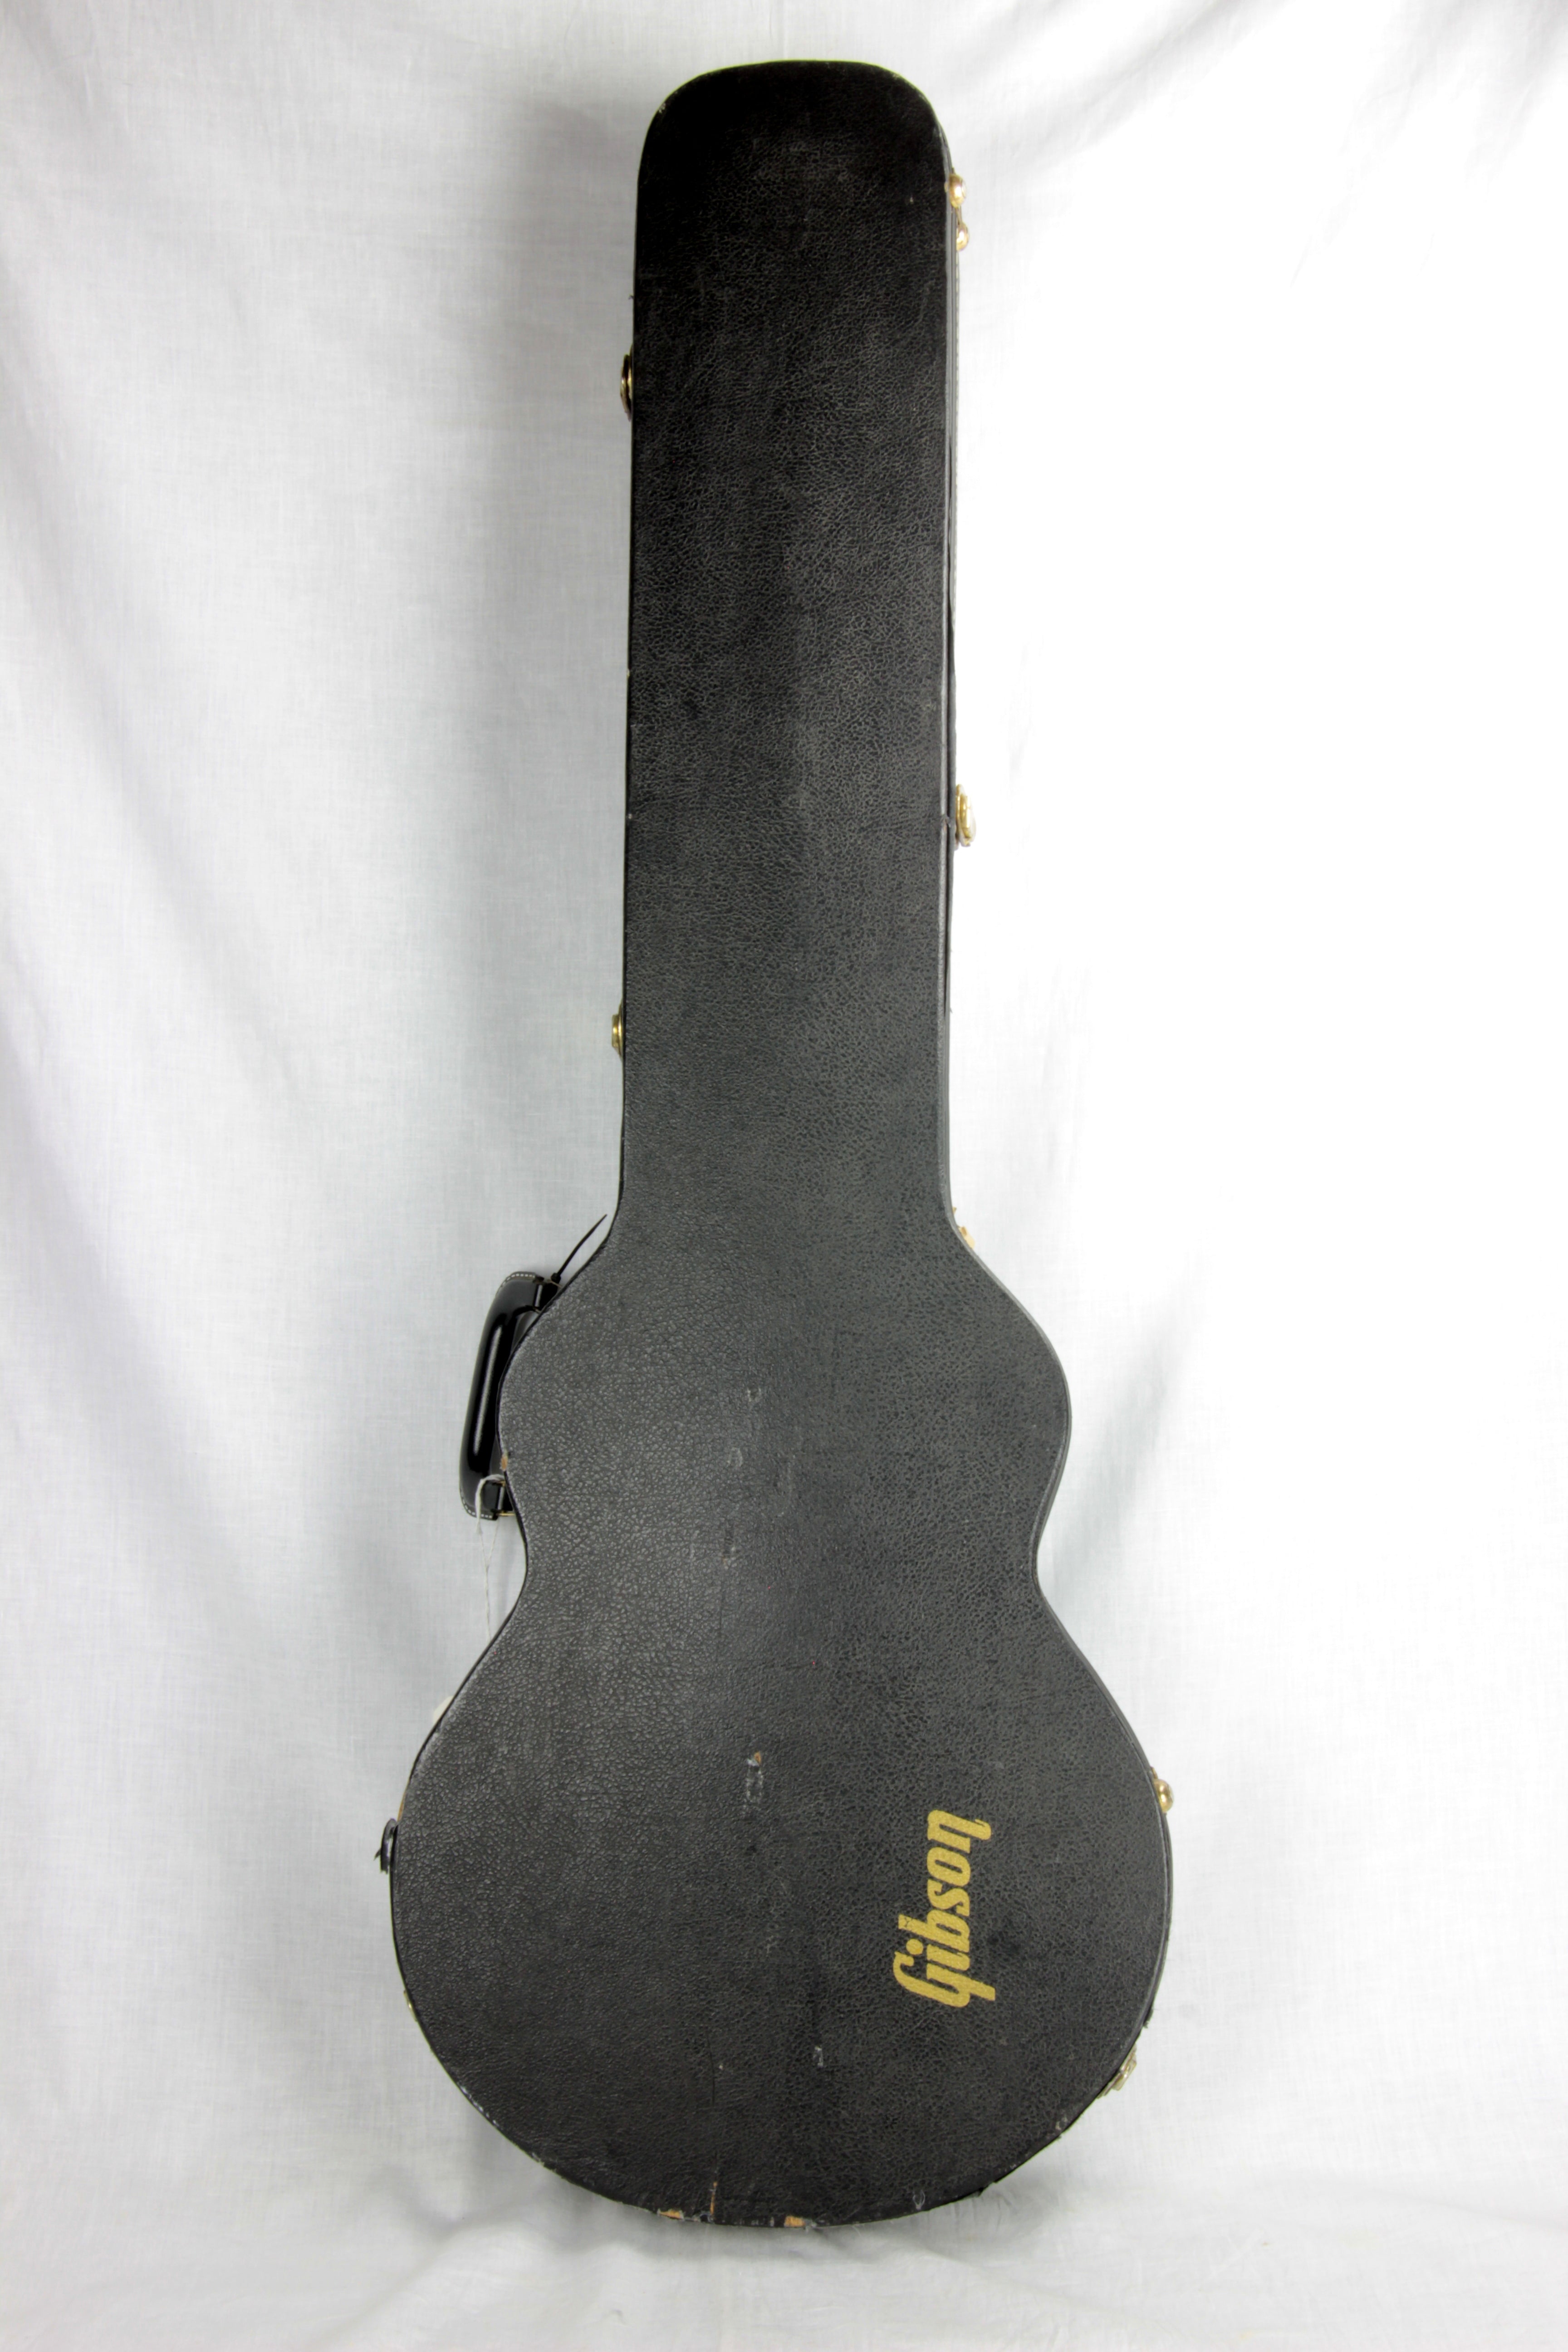 *SOLD*  1971 Gibson Les Paul Triumph Bass w/ Original Case! All-Original, No Breaks! 1970's